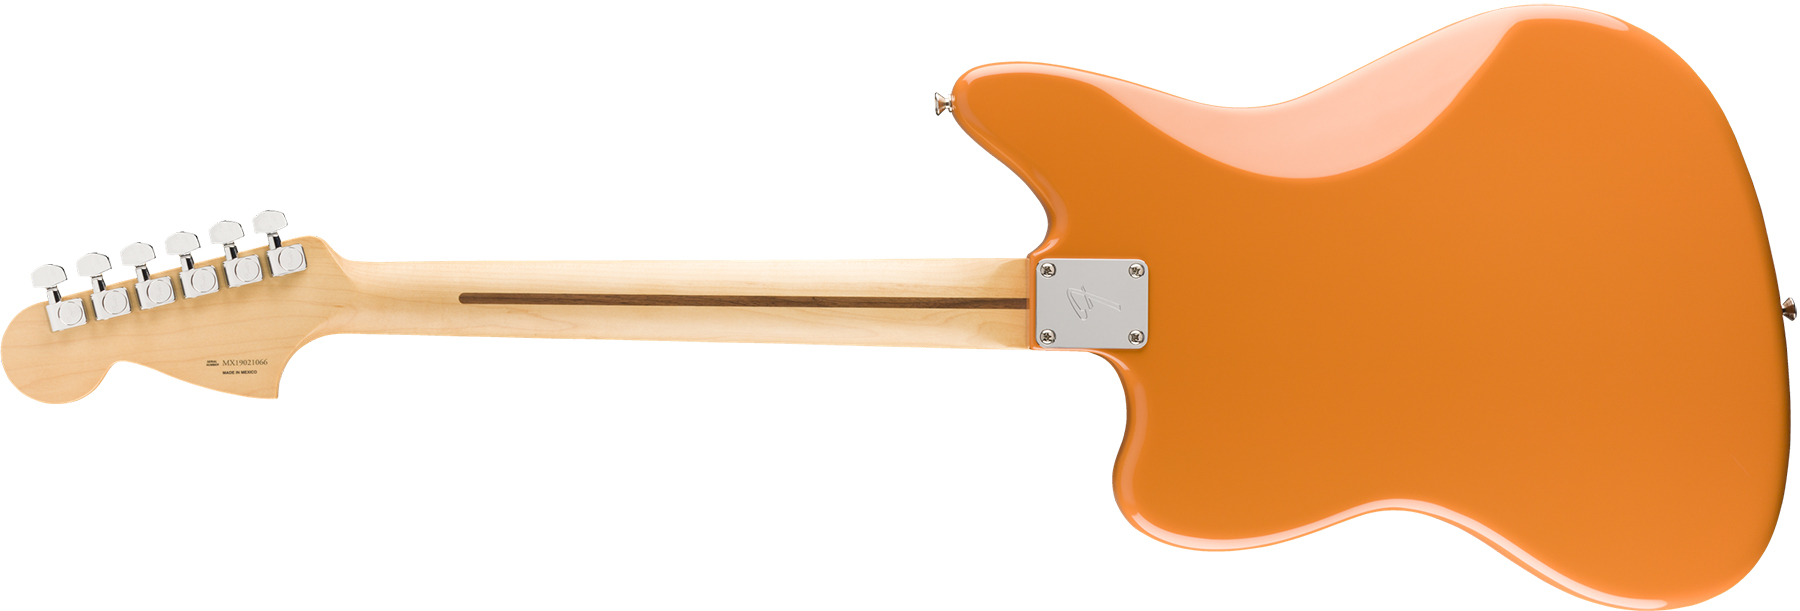 Fender Jaguar Player Mex Hs Pf - Capri Orange - Retro rock electric guitar - Variation 1